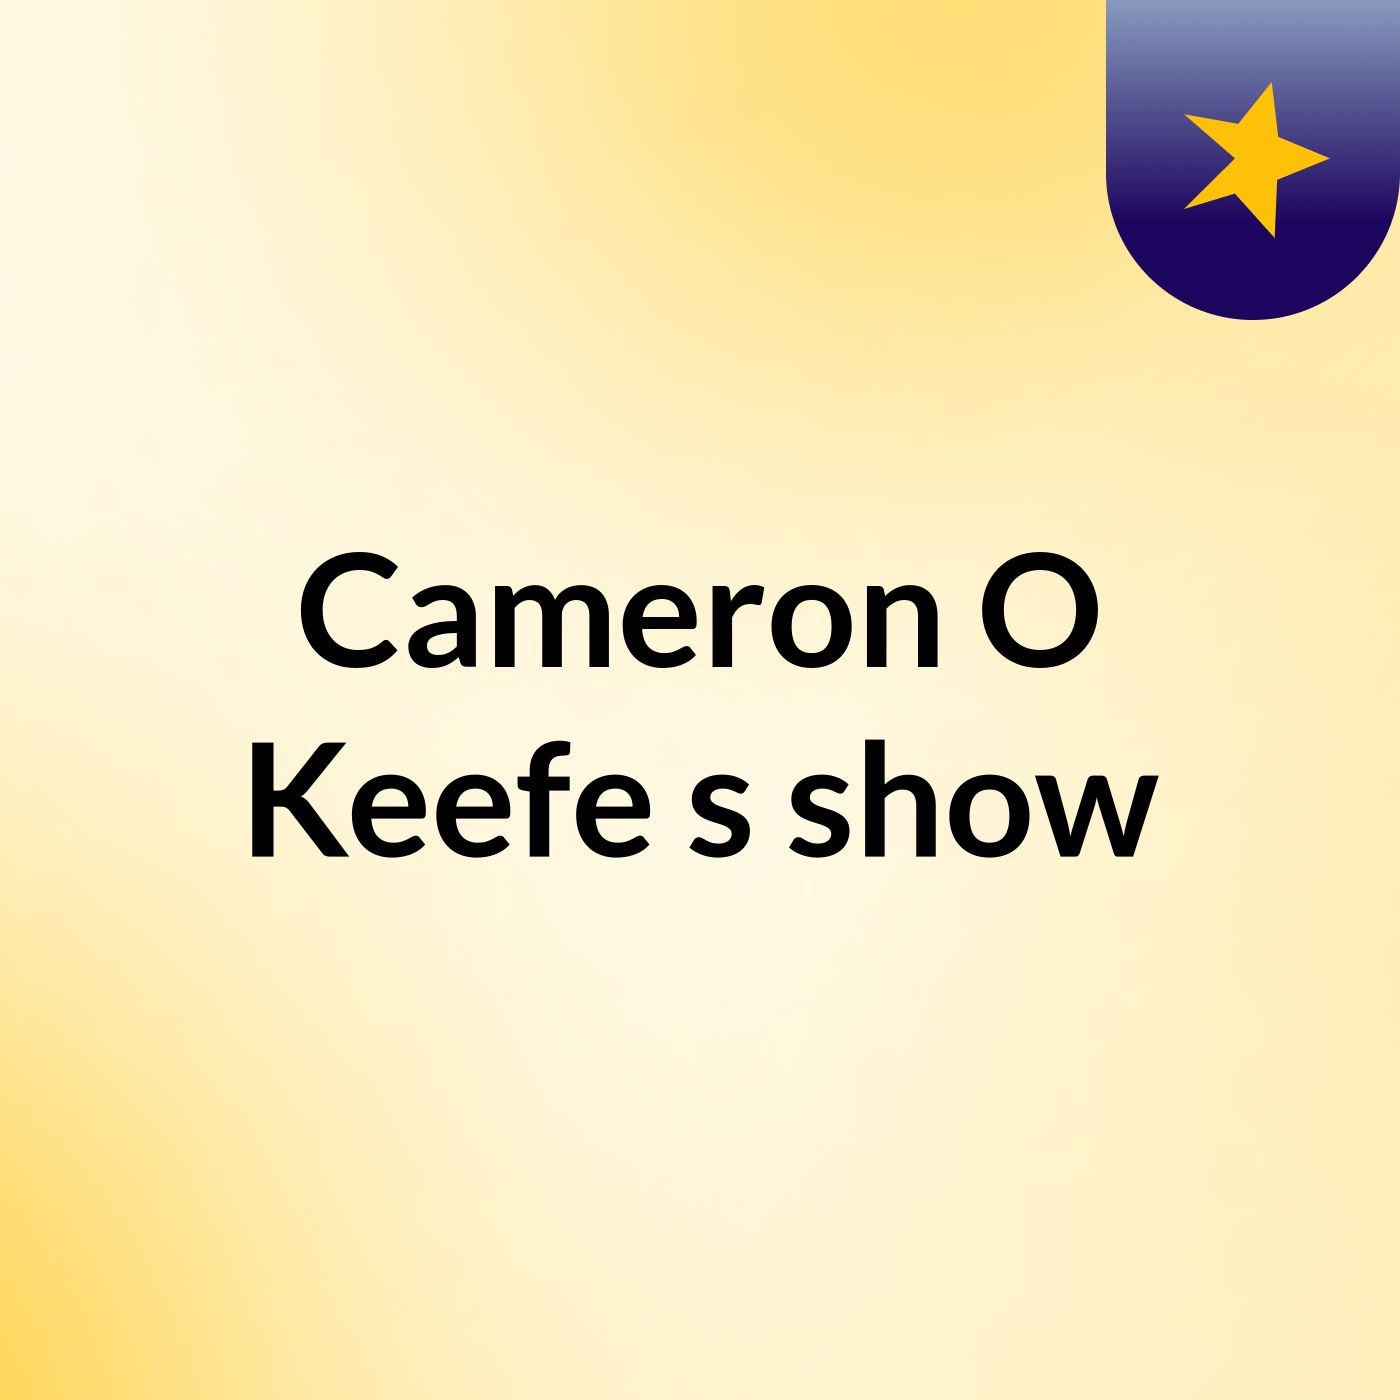 Cameron O'Keefe's show